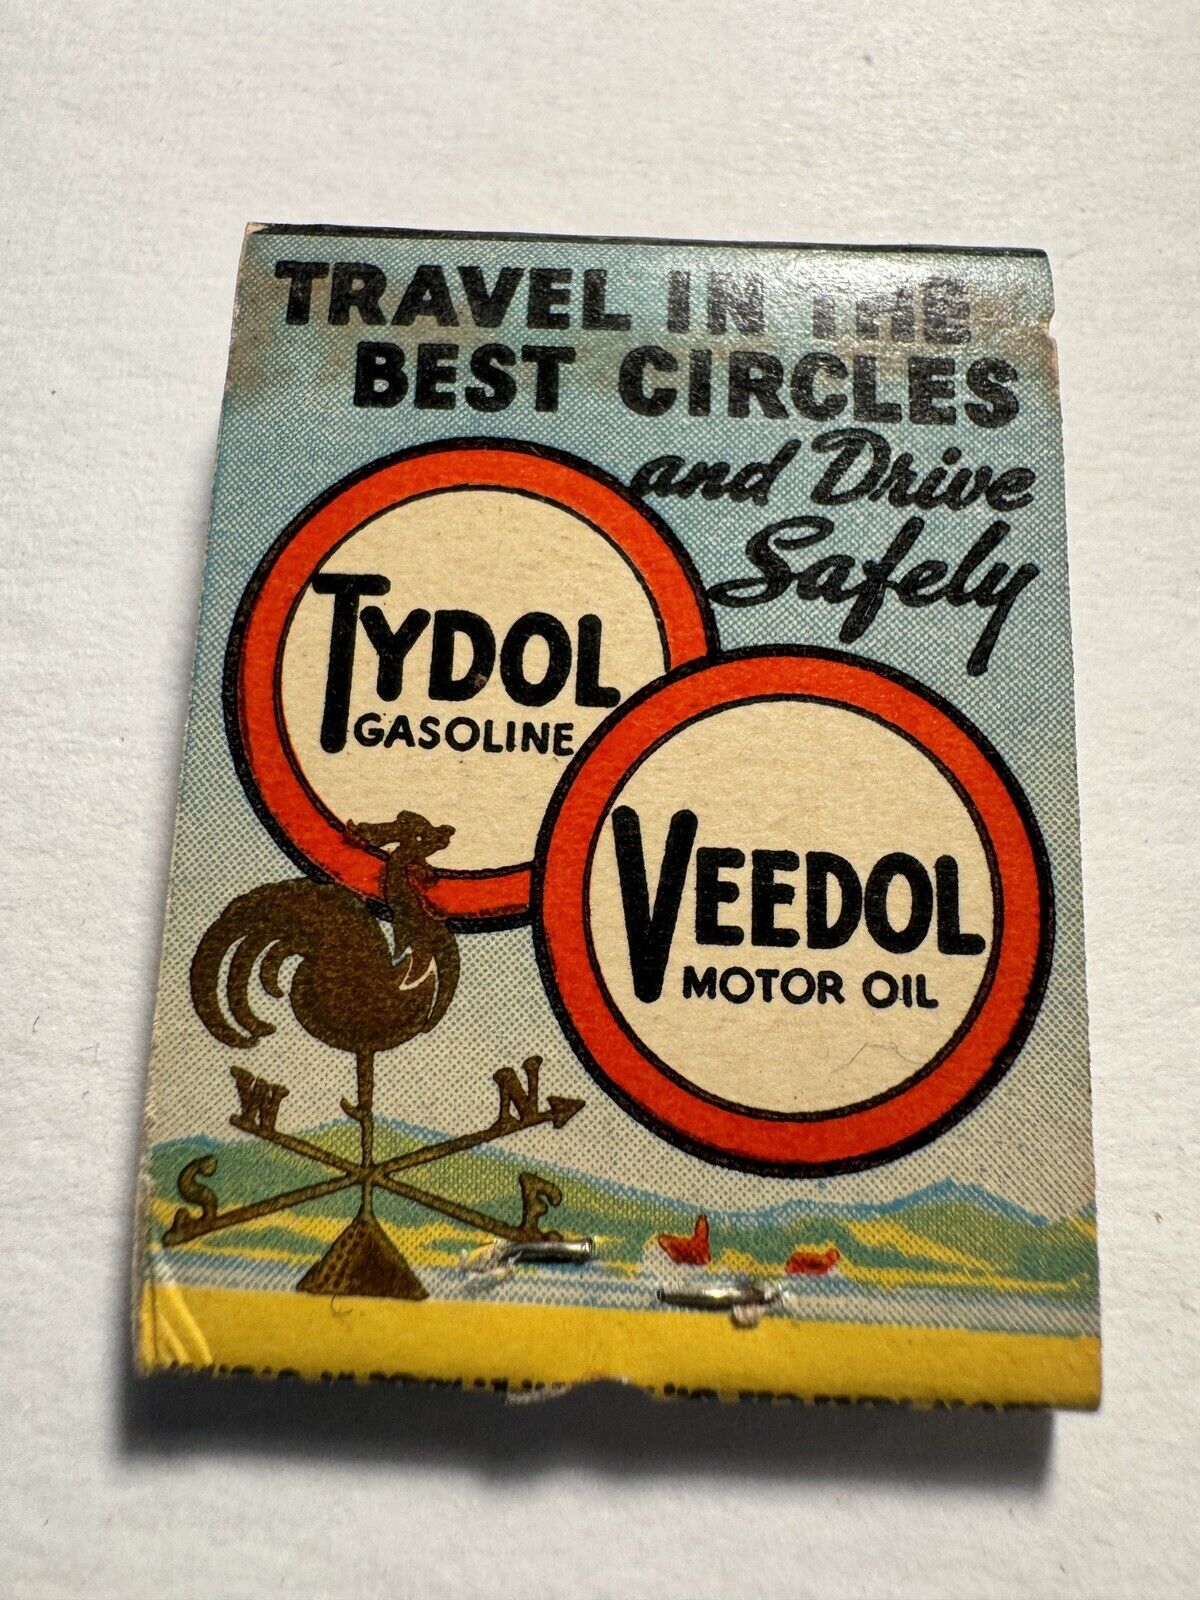 VEEDOL MOTOR OIL TYDOL GASOLINE / Cohoes, New York / Feature Matchbook Unstruck